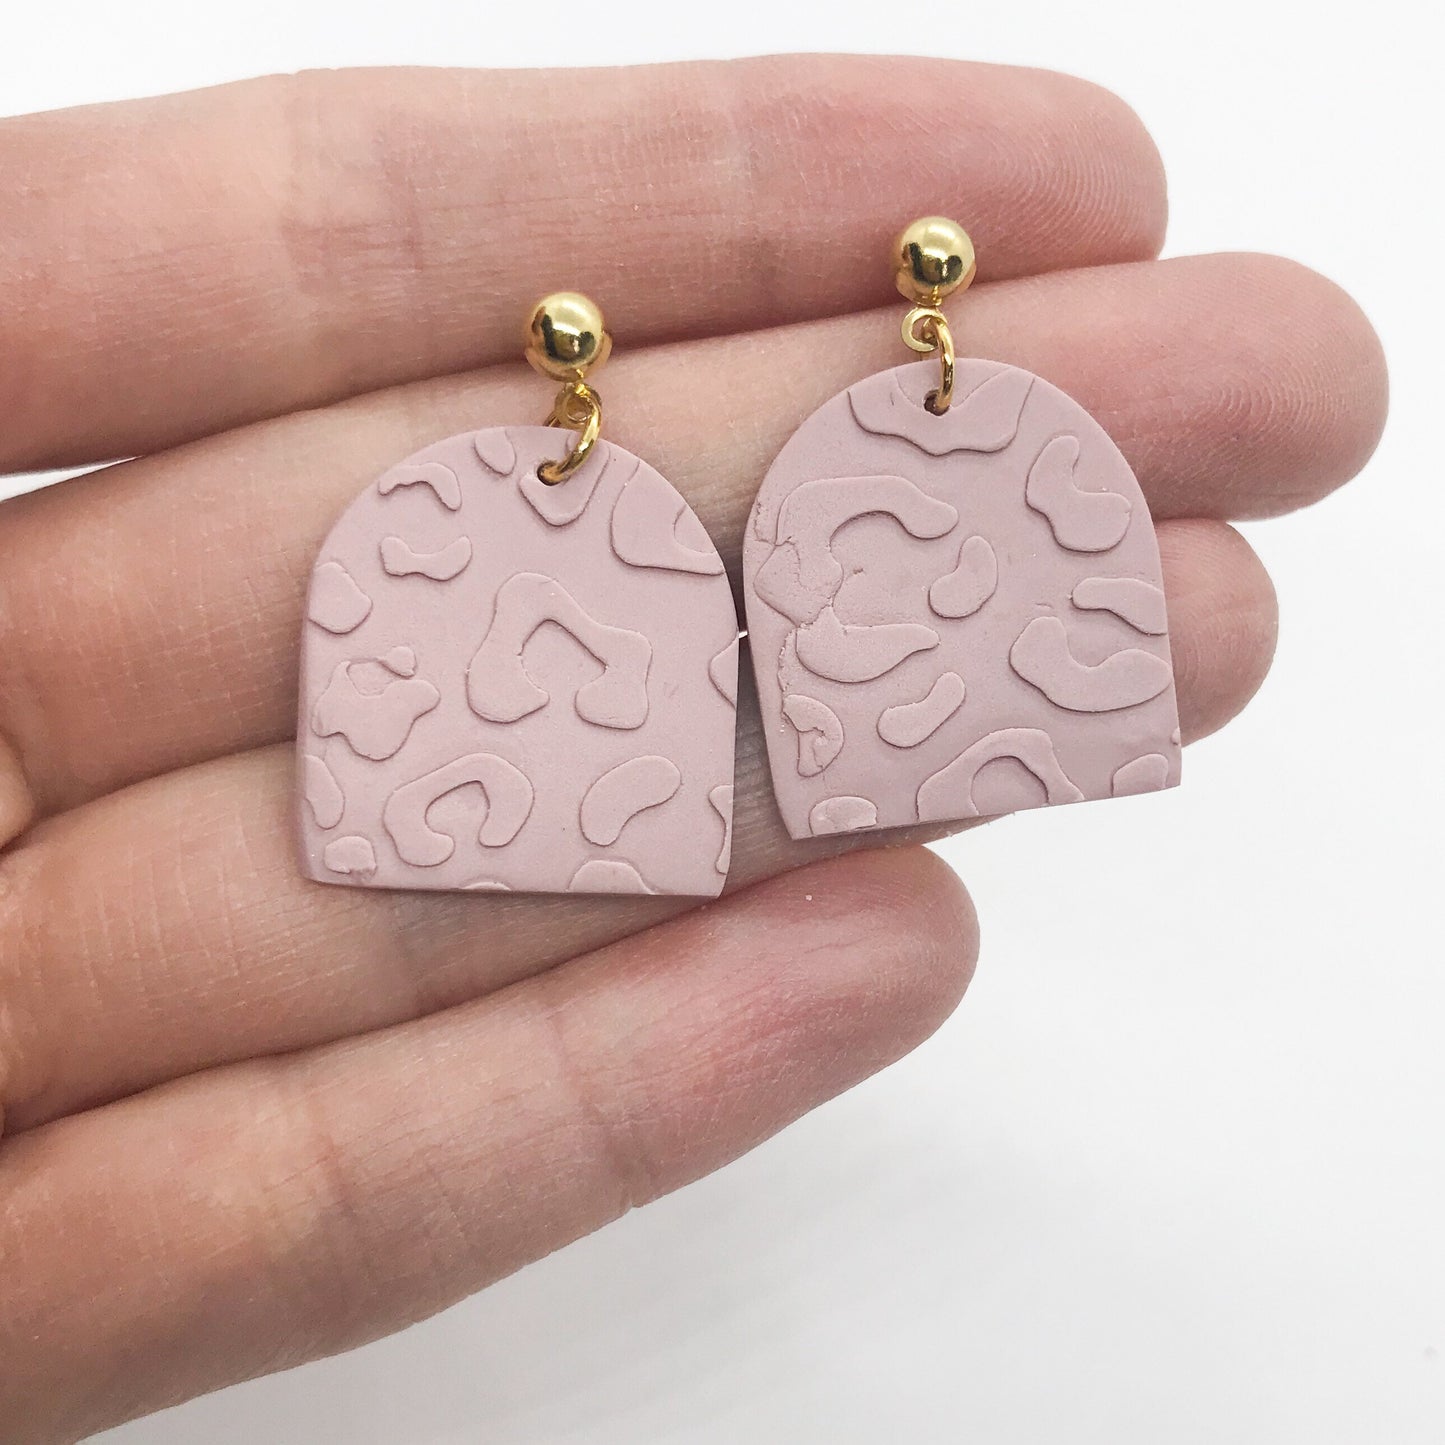 polymer clay leopard print earrings in dusty pink, nickel free brass post, post box gift, best friend birthday gift, girlfriend gift,